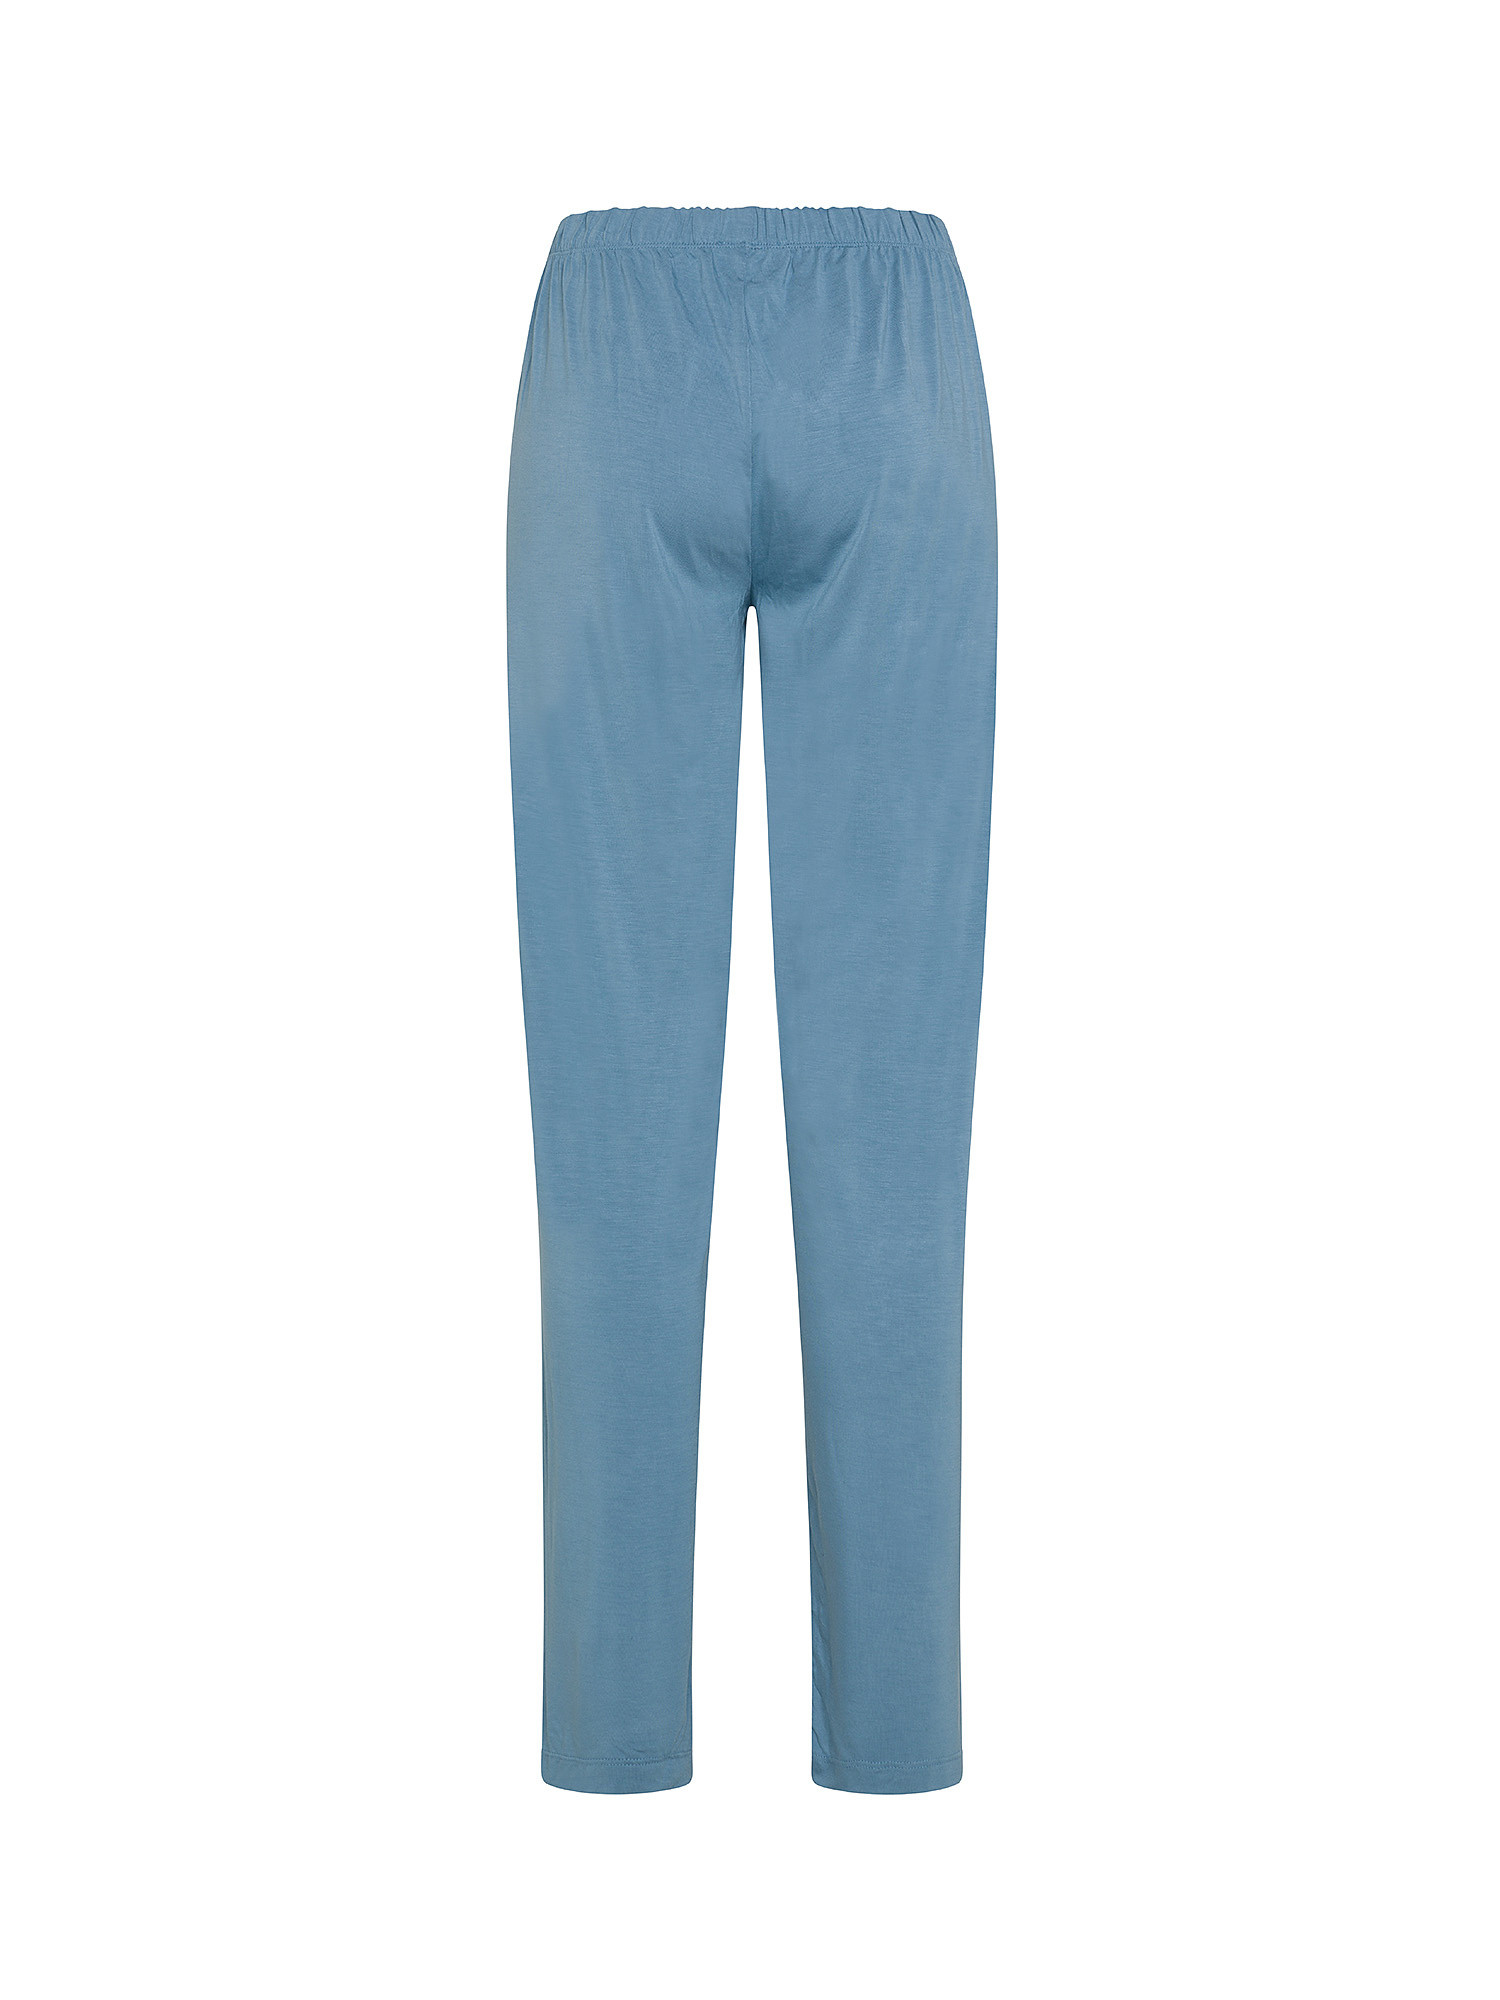 Pantaloni in viscosa di bamboo tinta unita, Azzurro, large image number 1